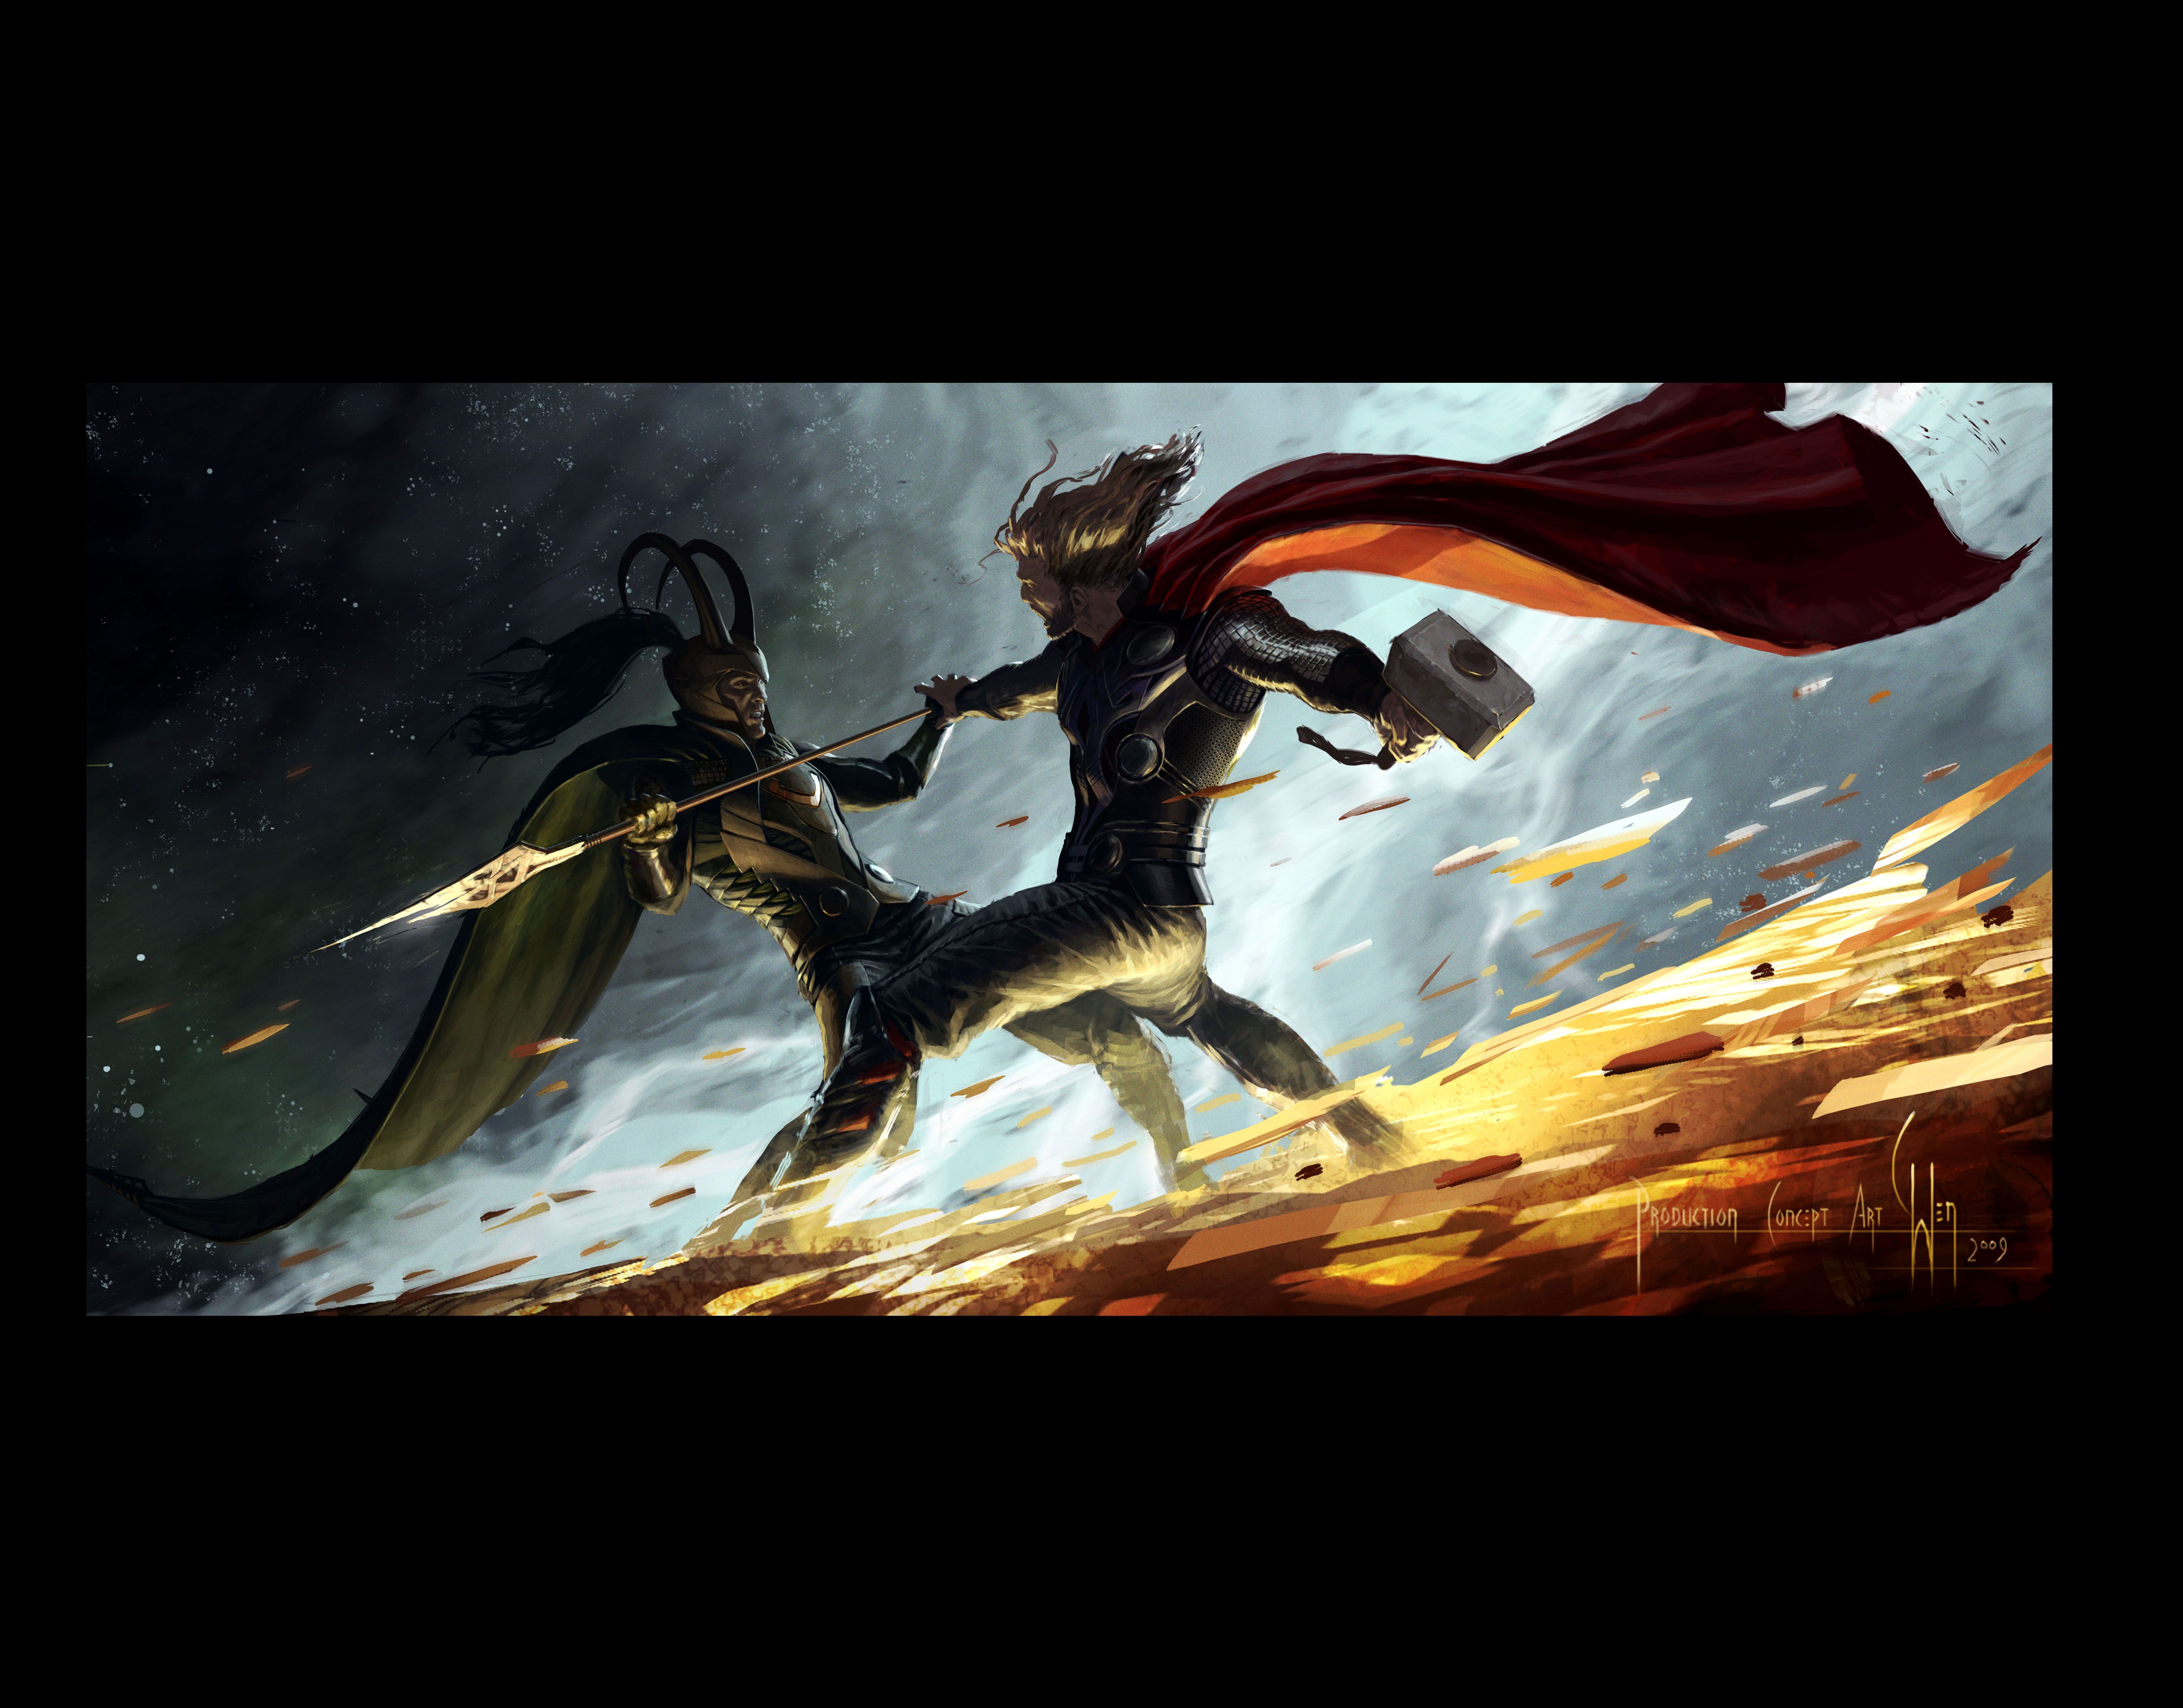 Thor Comic-Con poster